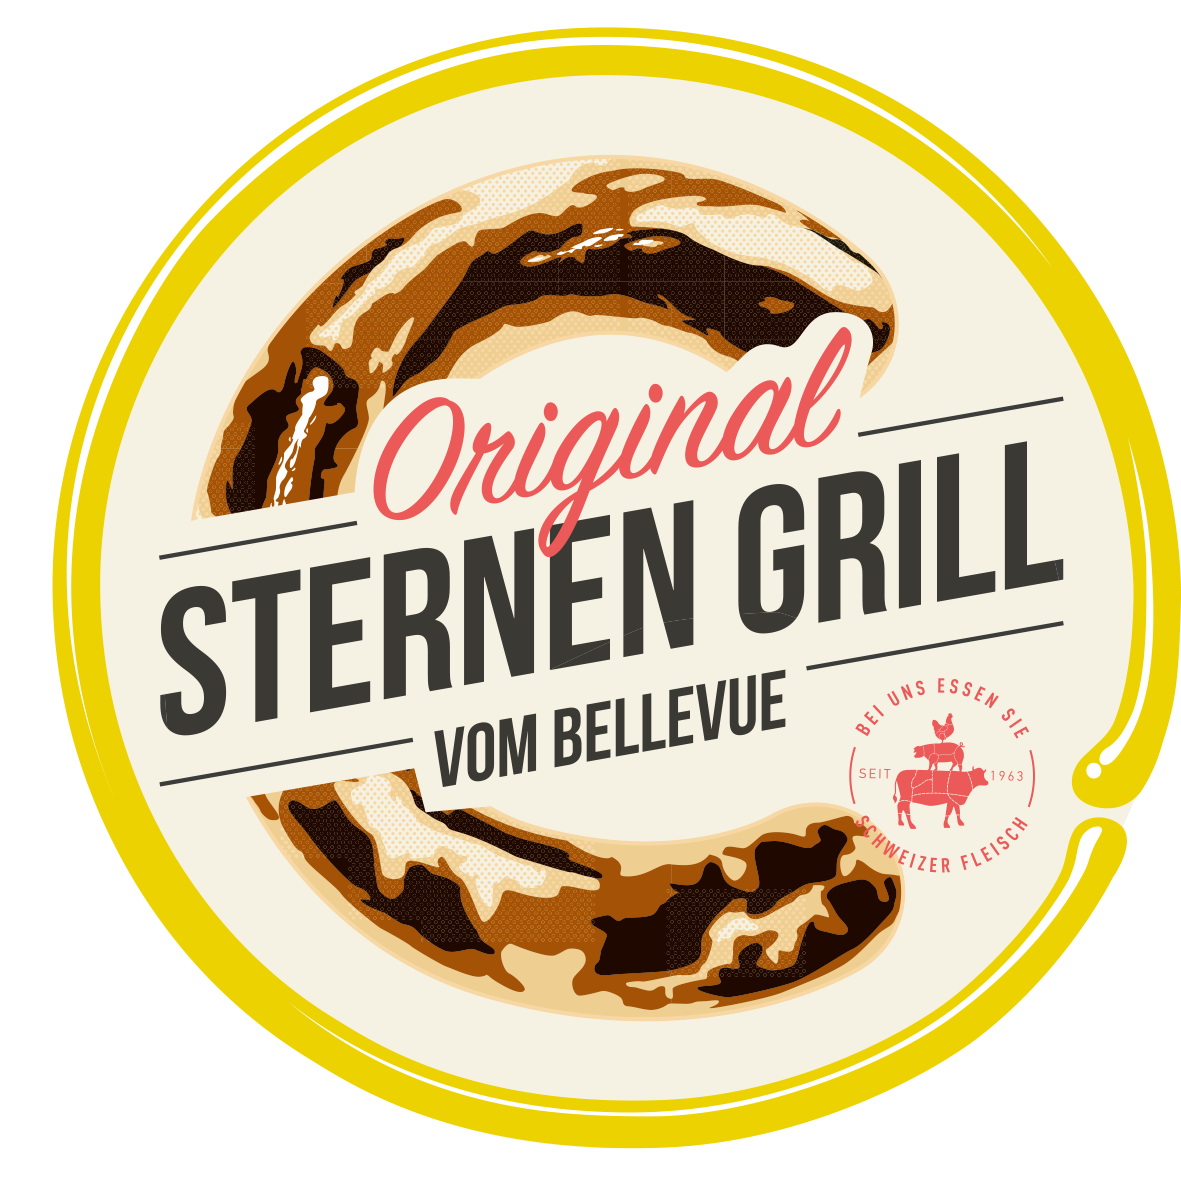 Sternen Grill + Sternen Grill Restaurant im oberen Stock Logo